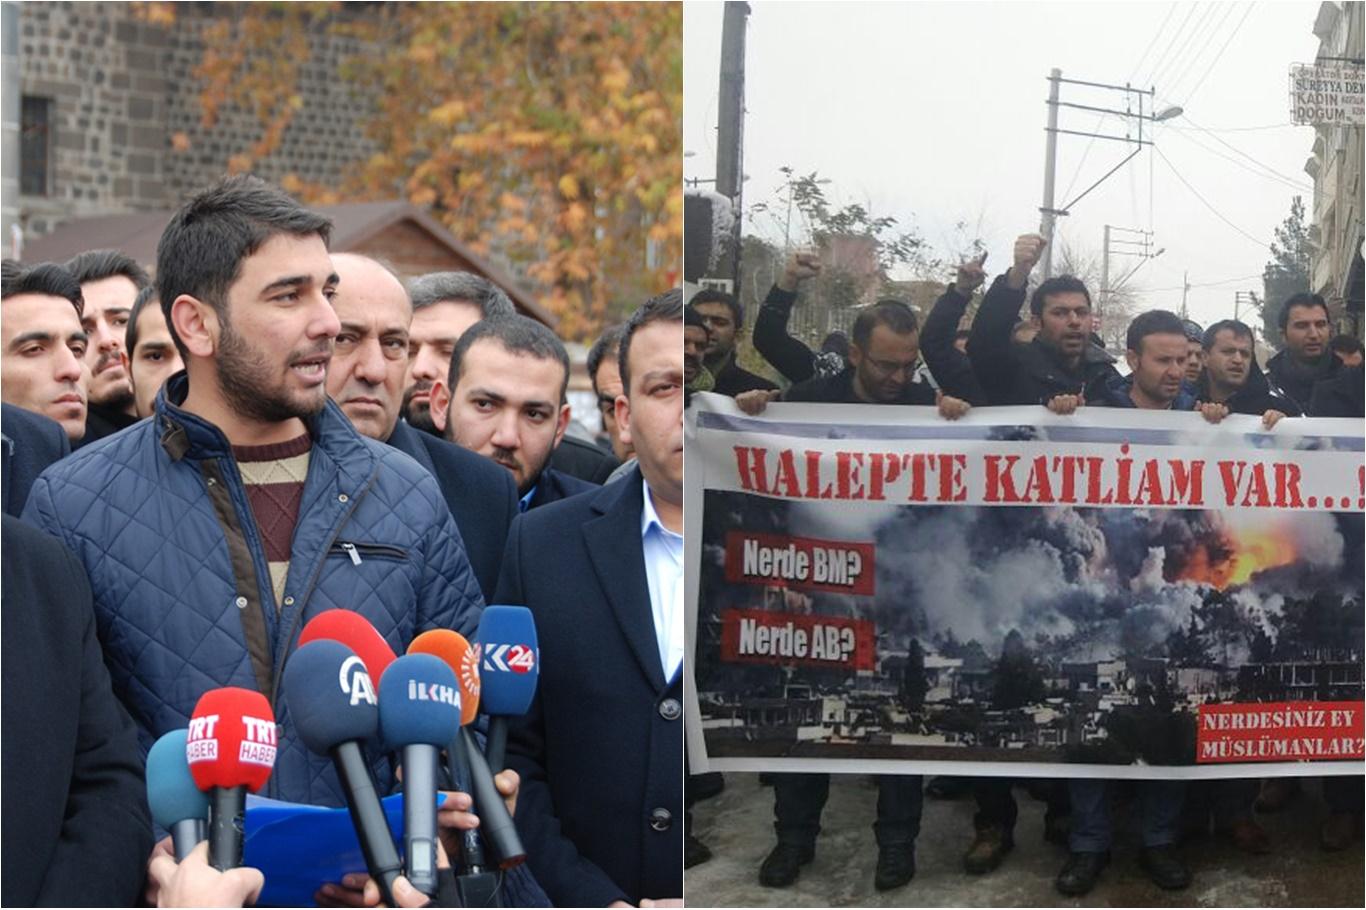 Diyarbakır’da Halep katliamı protesto edildi